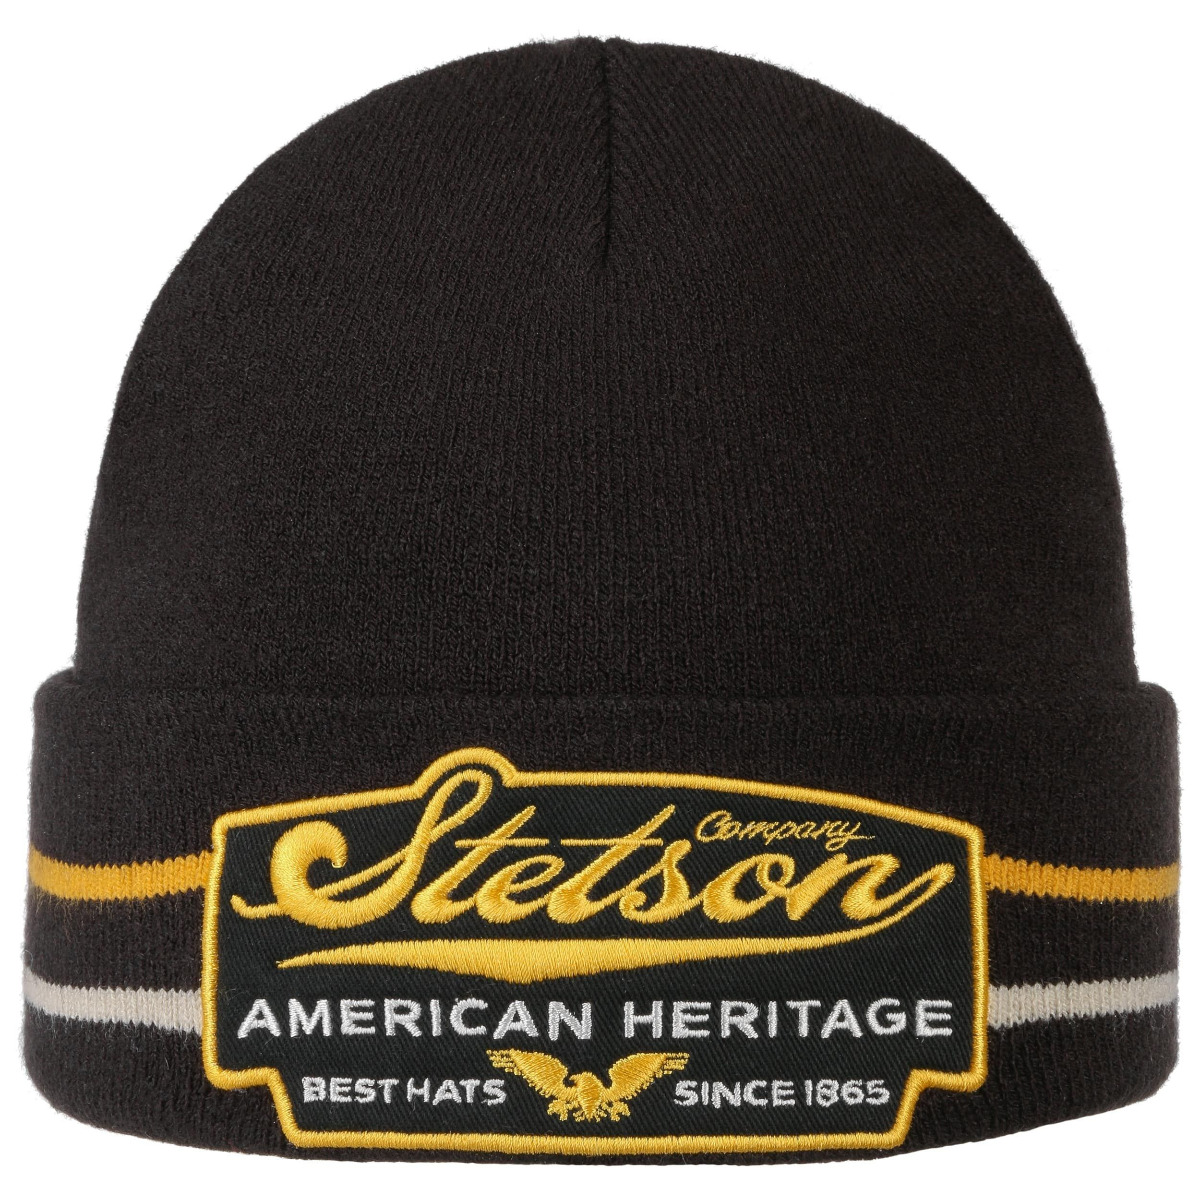 Stetson American Heritage Best Hats Beanie black